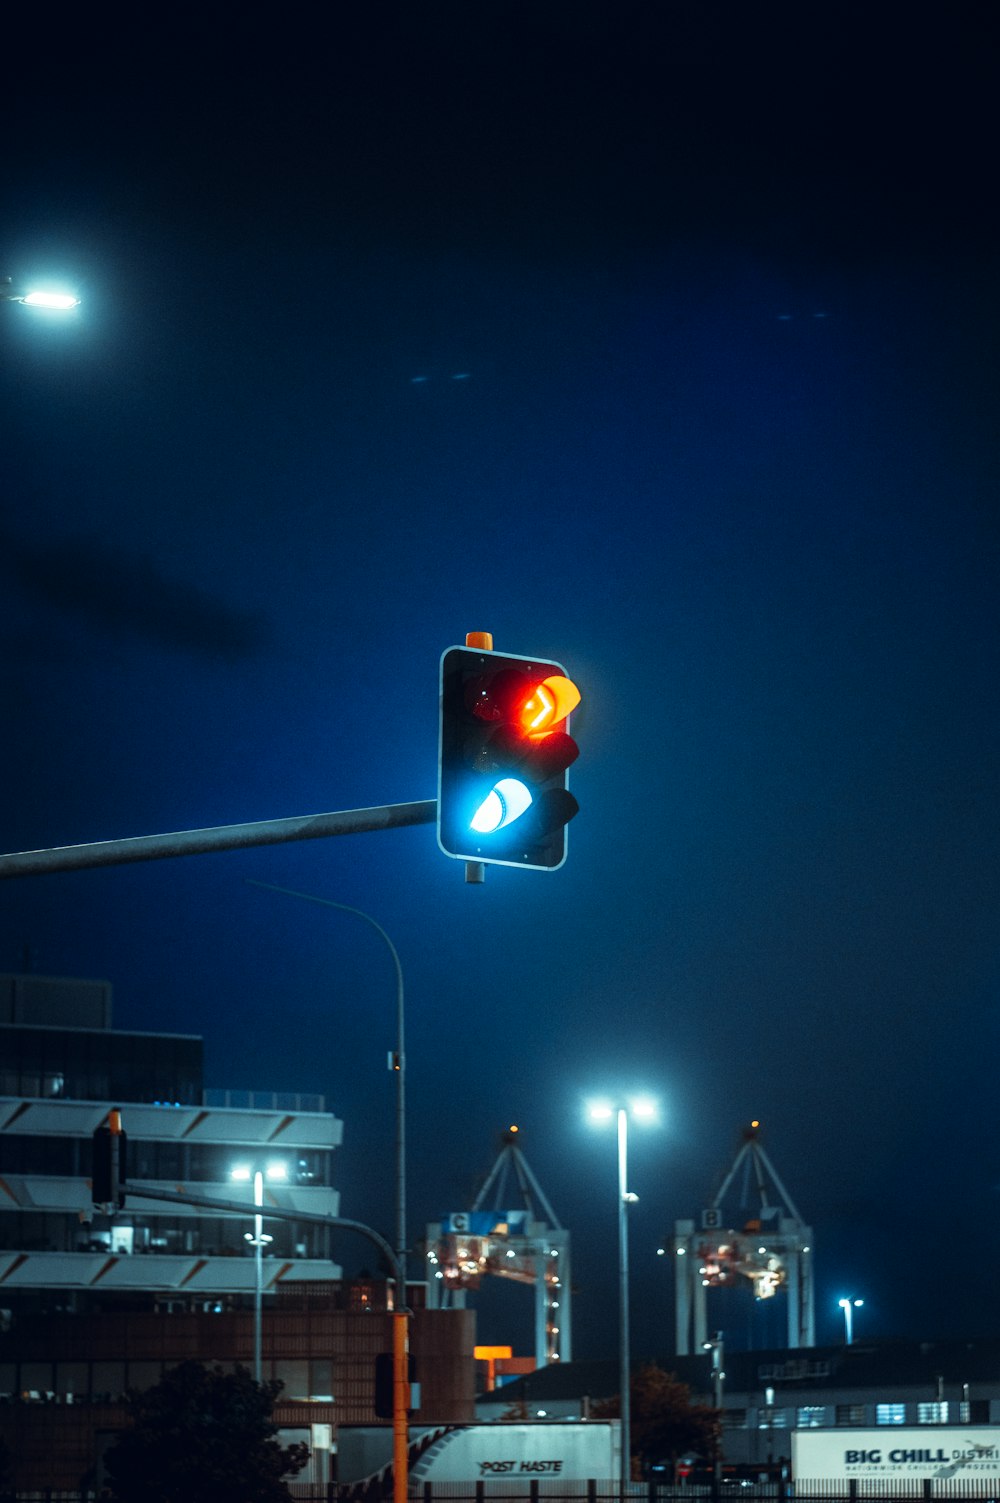 a traffic light on a street at night